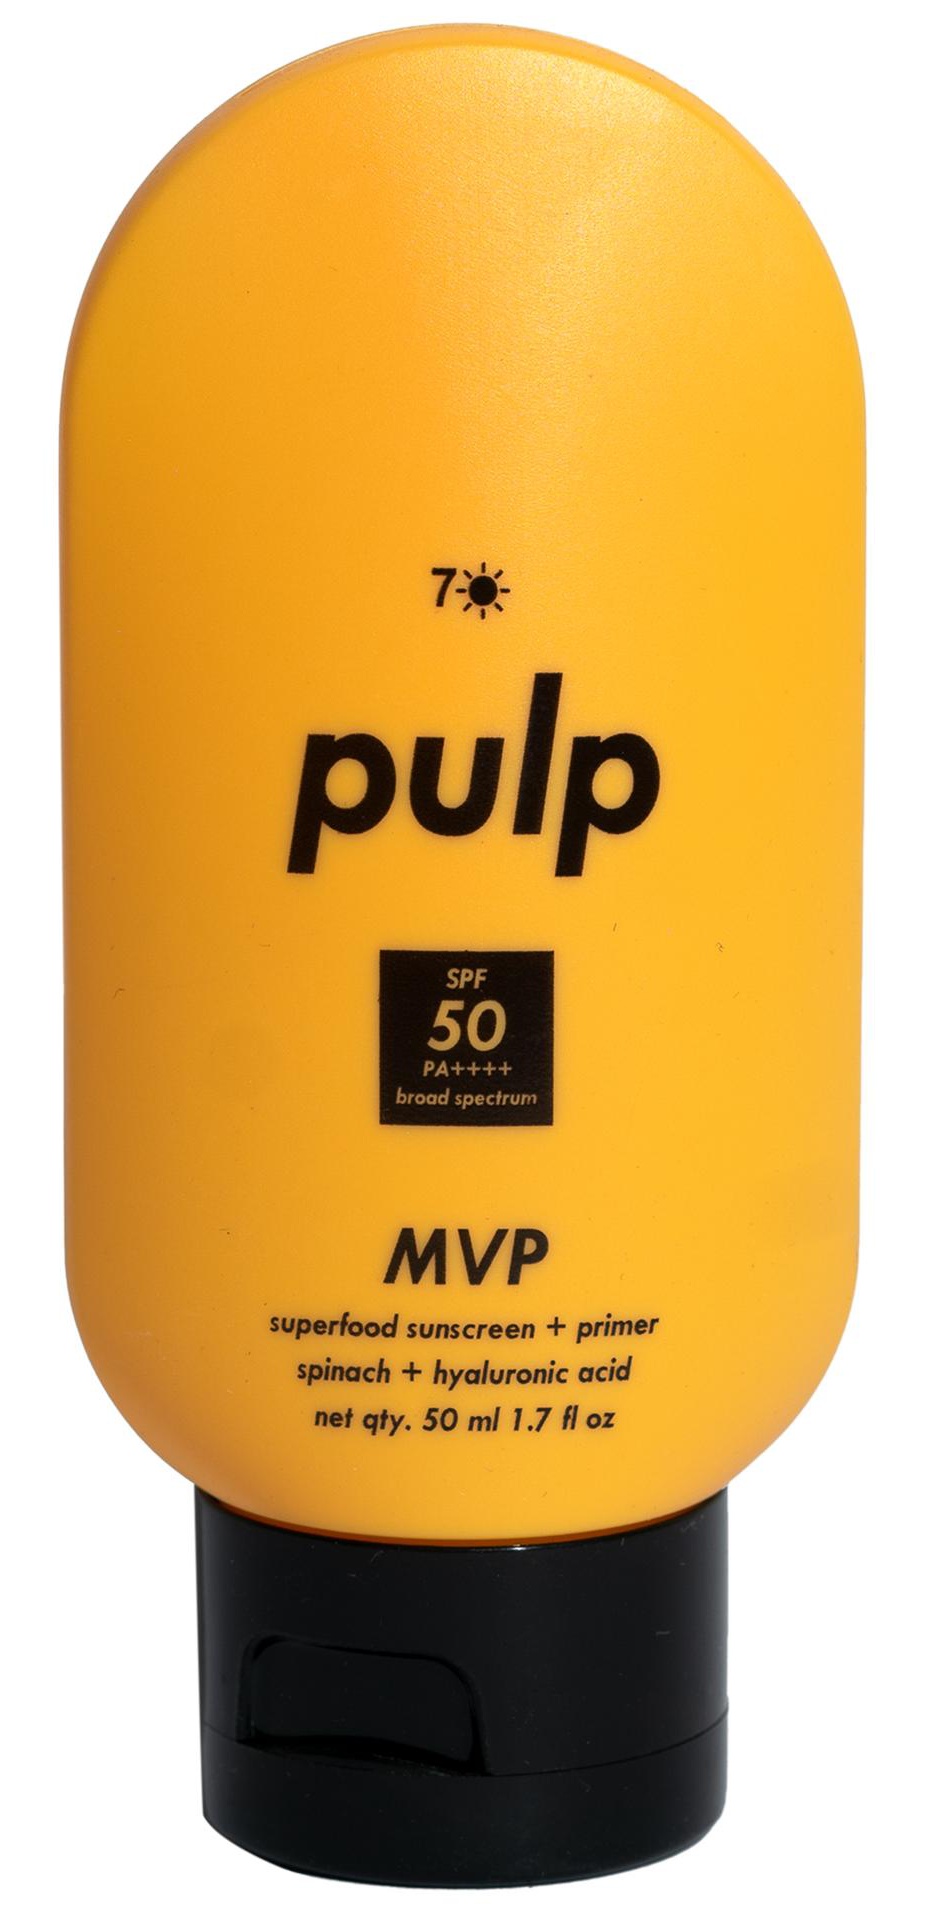 Pulp Mvp Daily Sunscreen + Primer 50 SPF